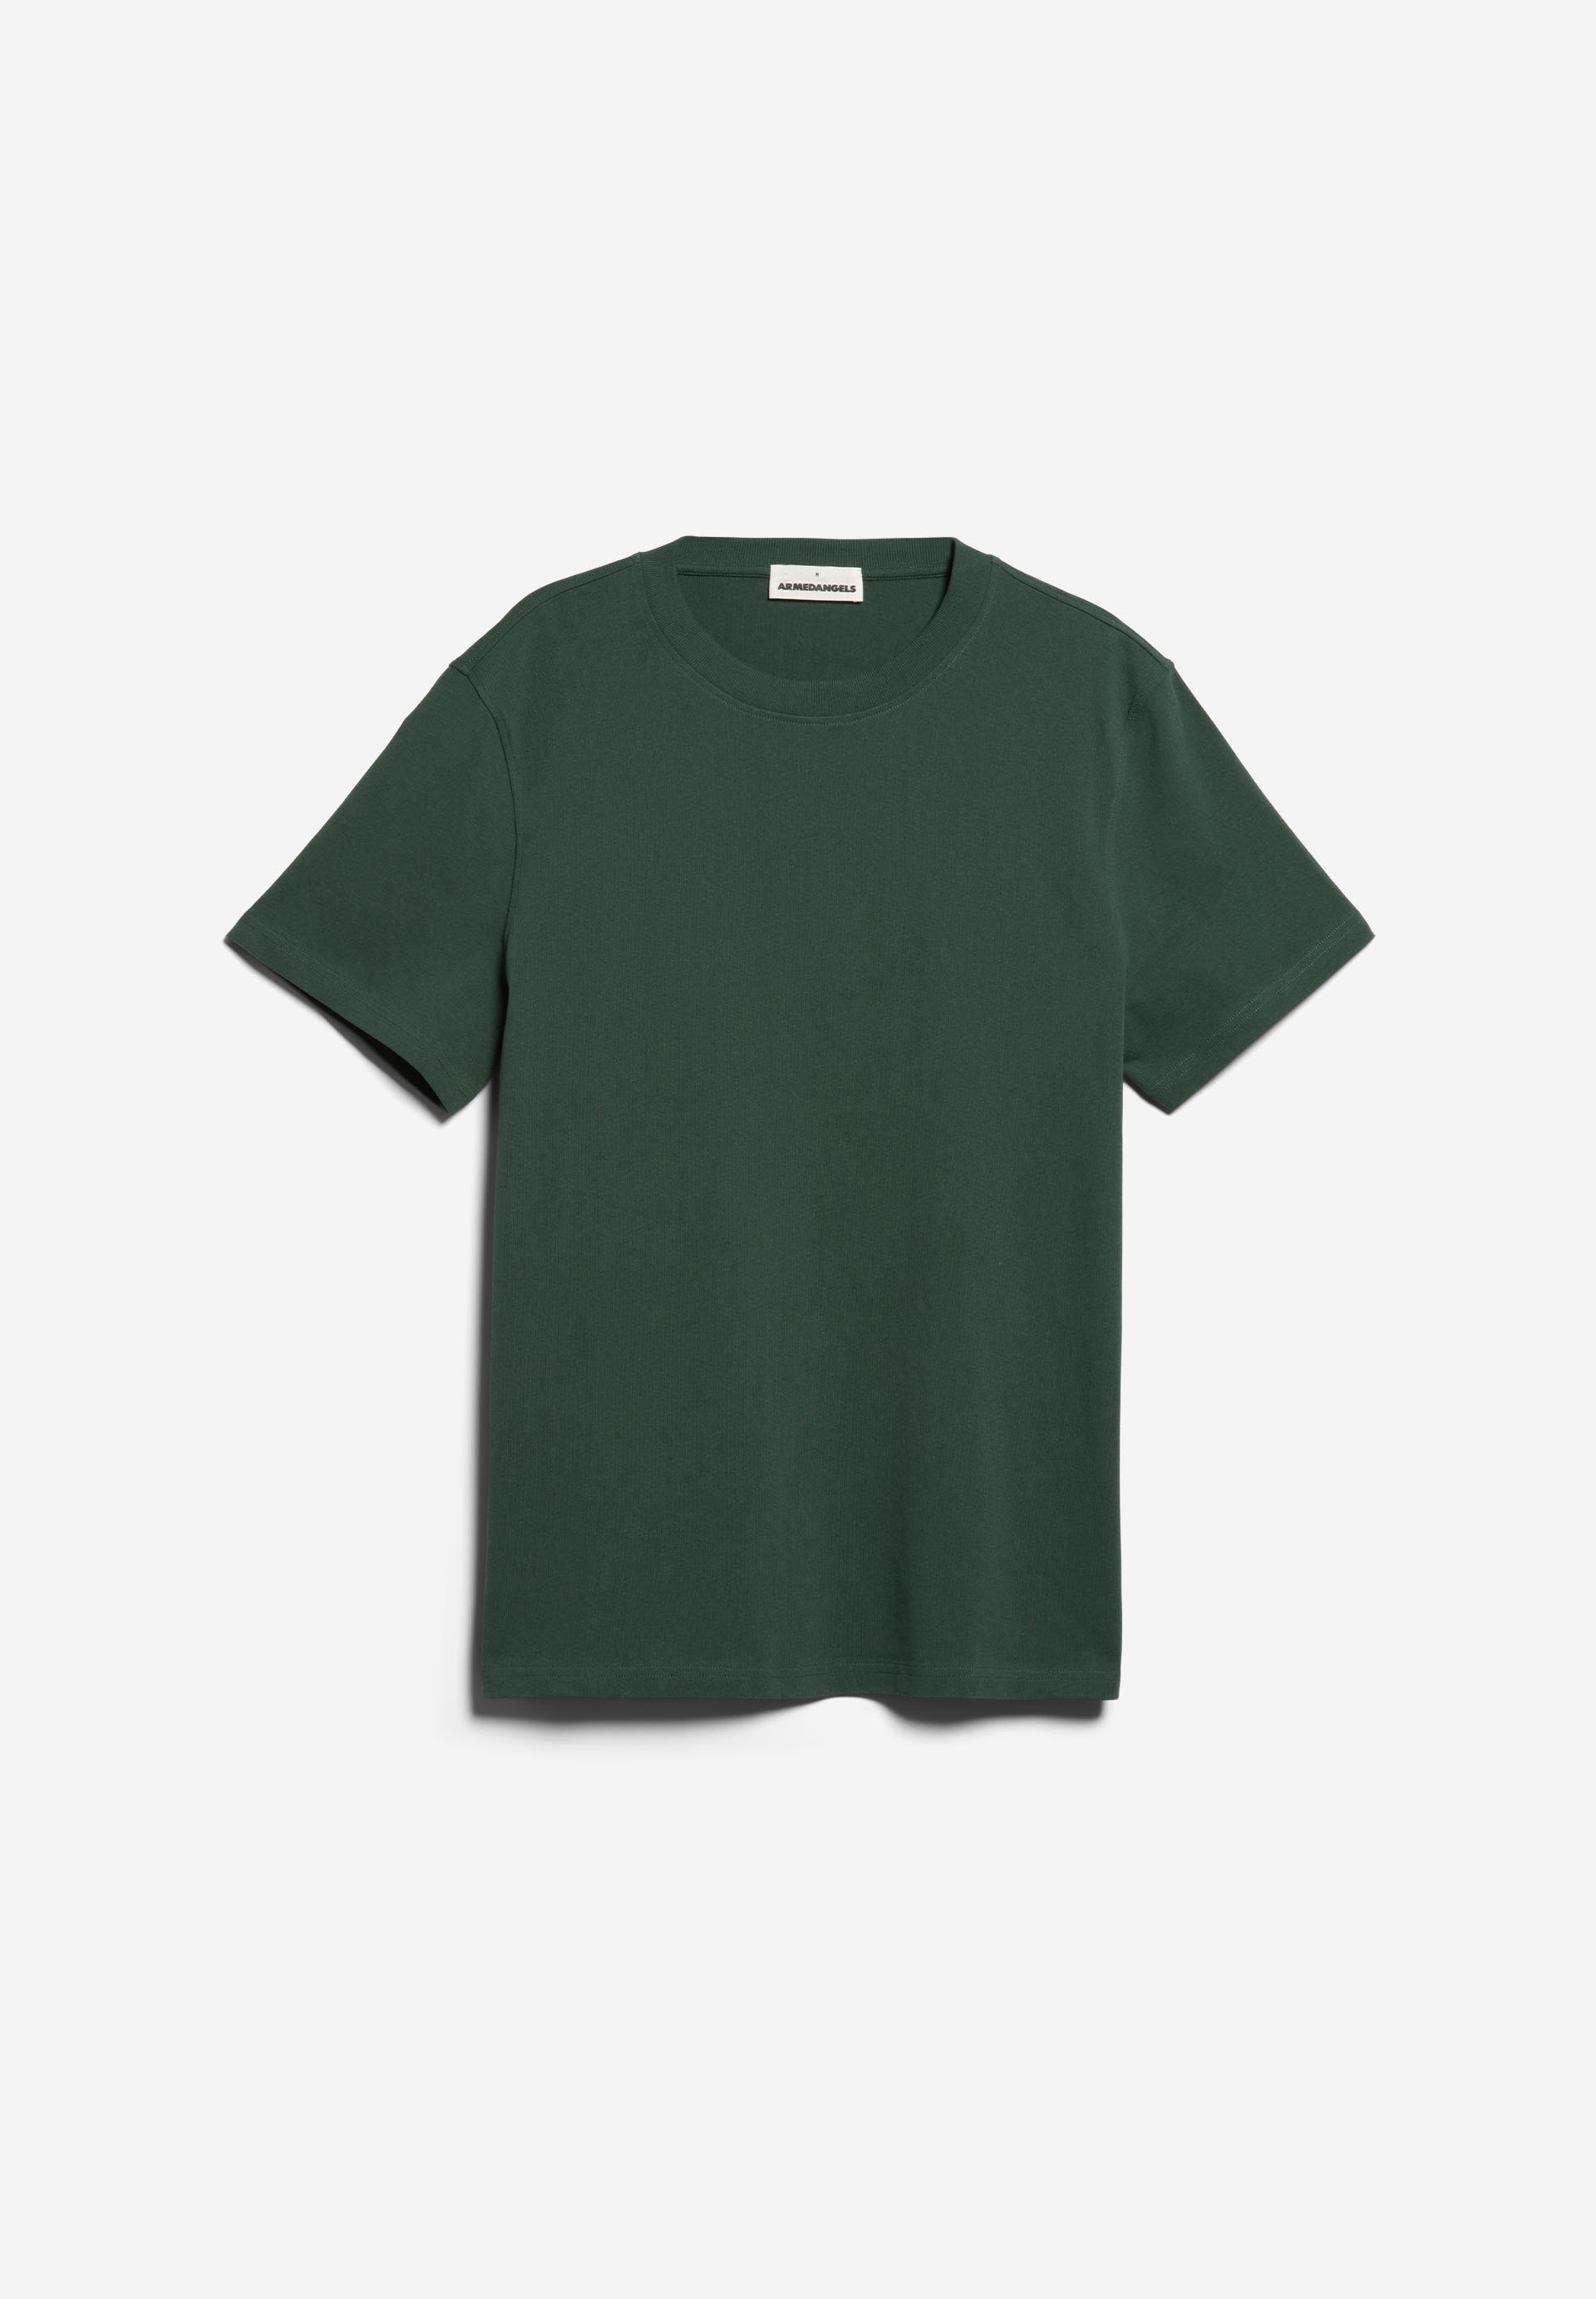 MAARKOS Heavyweight T-Shirt Relaxed Fit made of Organic Cotton Mix